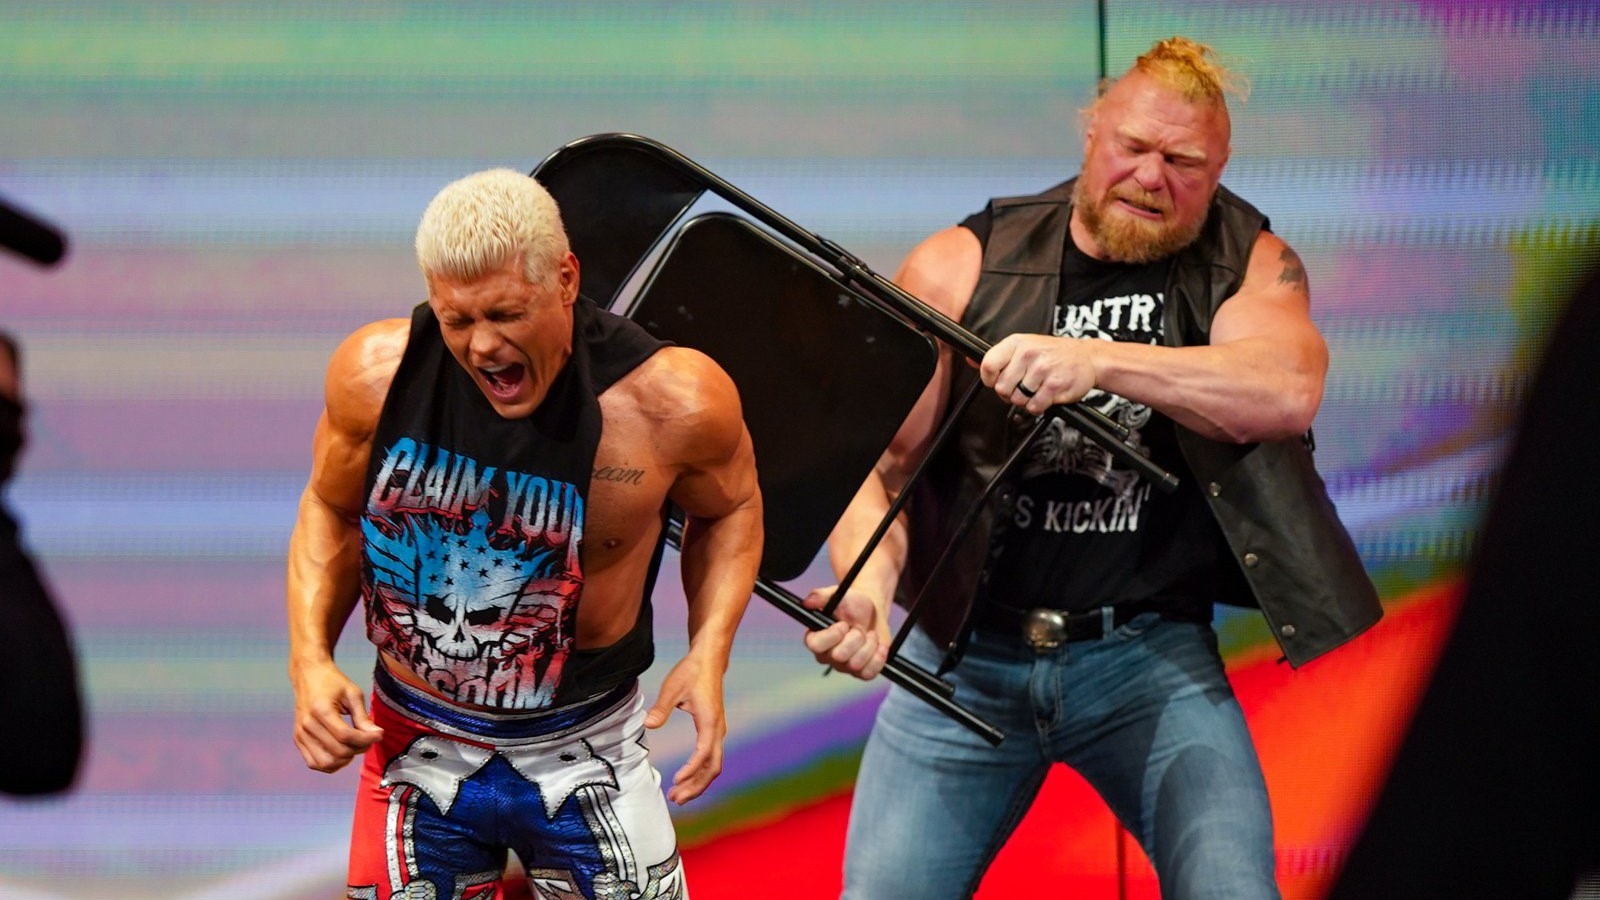 Cody Rhodes x Brock Lesnar 3 confirmado para o WWE SummerSlam